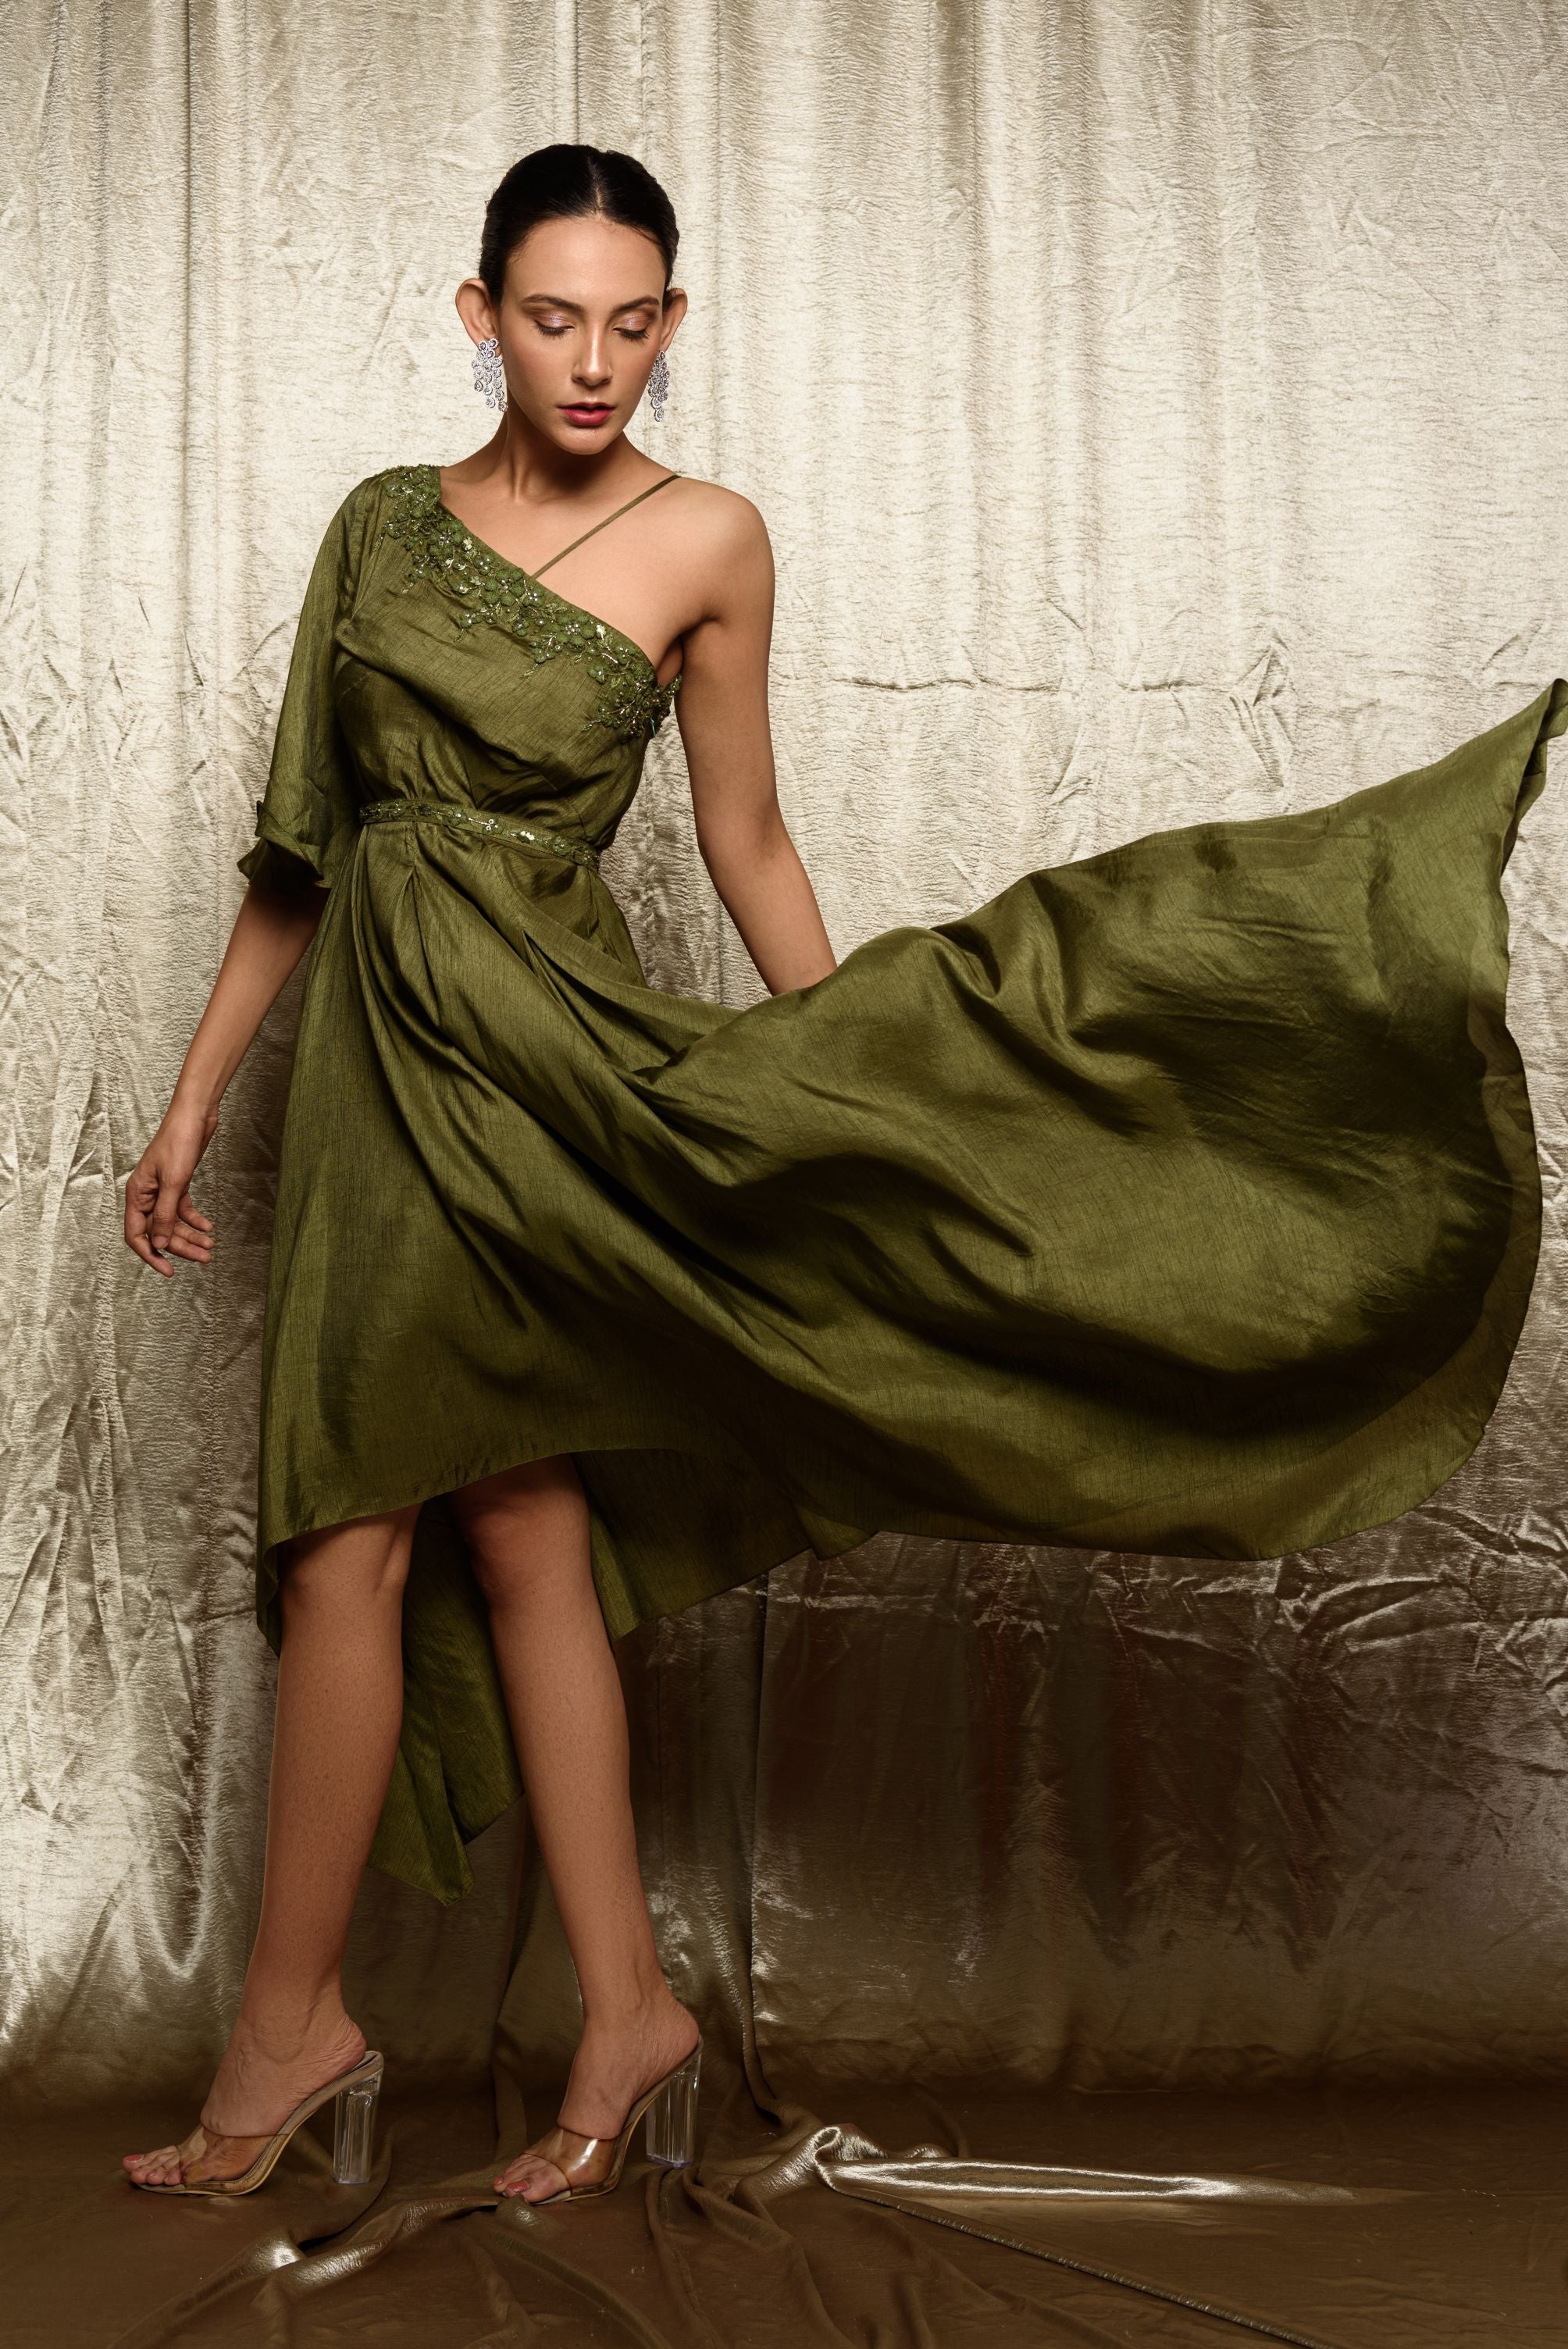 Olive Dress